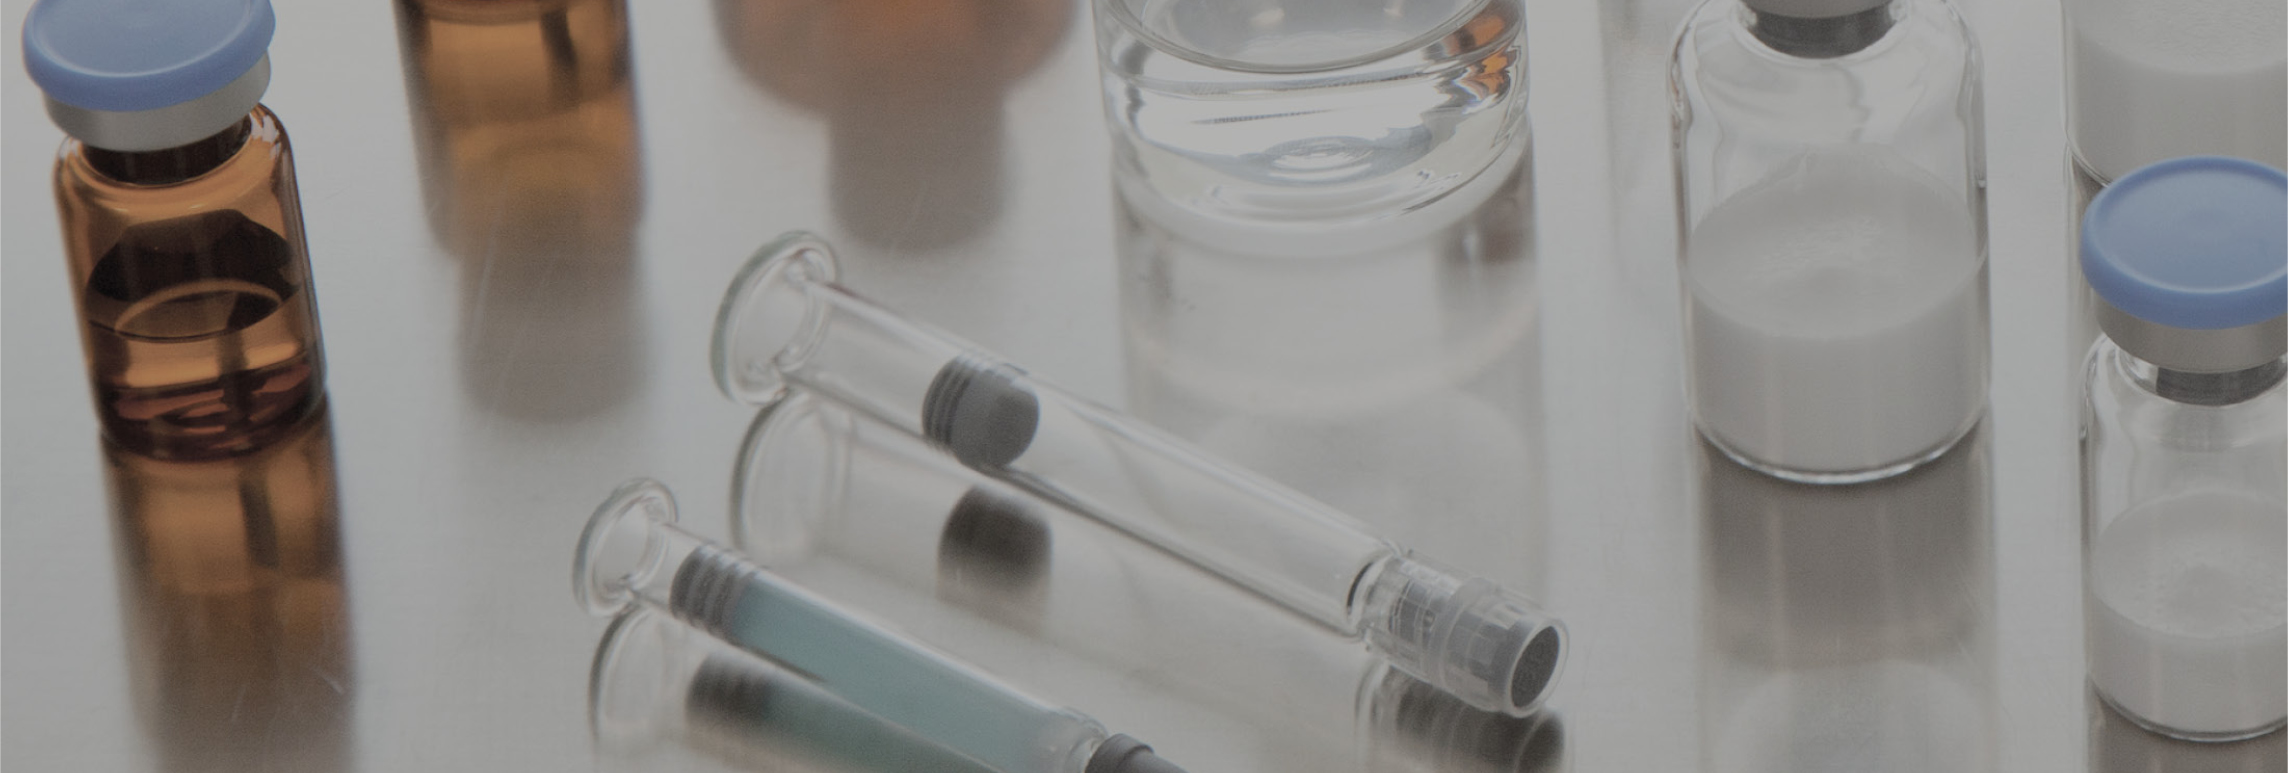 Formulation and Development of Injectable Drug Product at CARBOGEN AMCIS